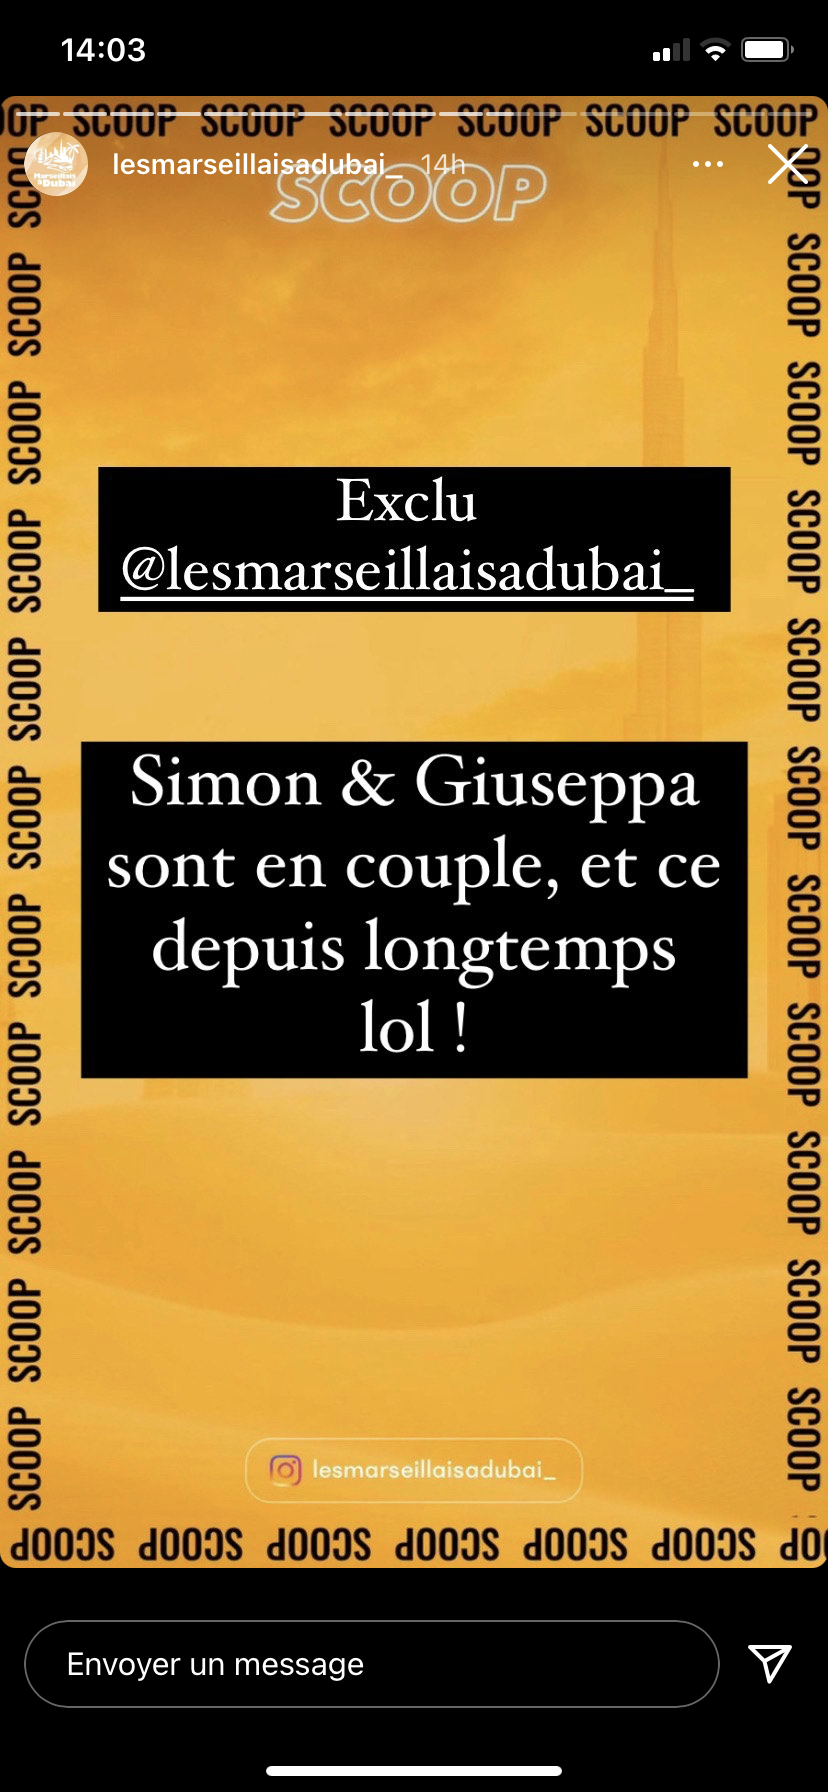  Simon Castaldi en couple avec Giuseppa @Lesmarseillaisadubai_